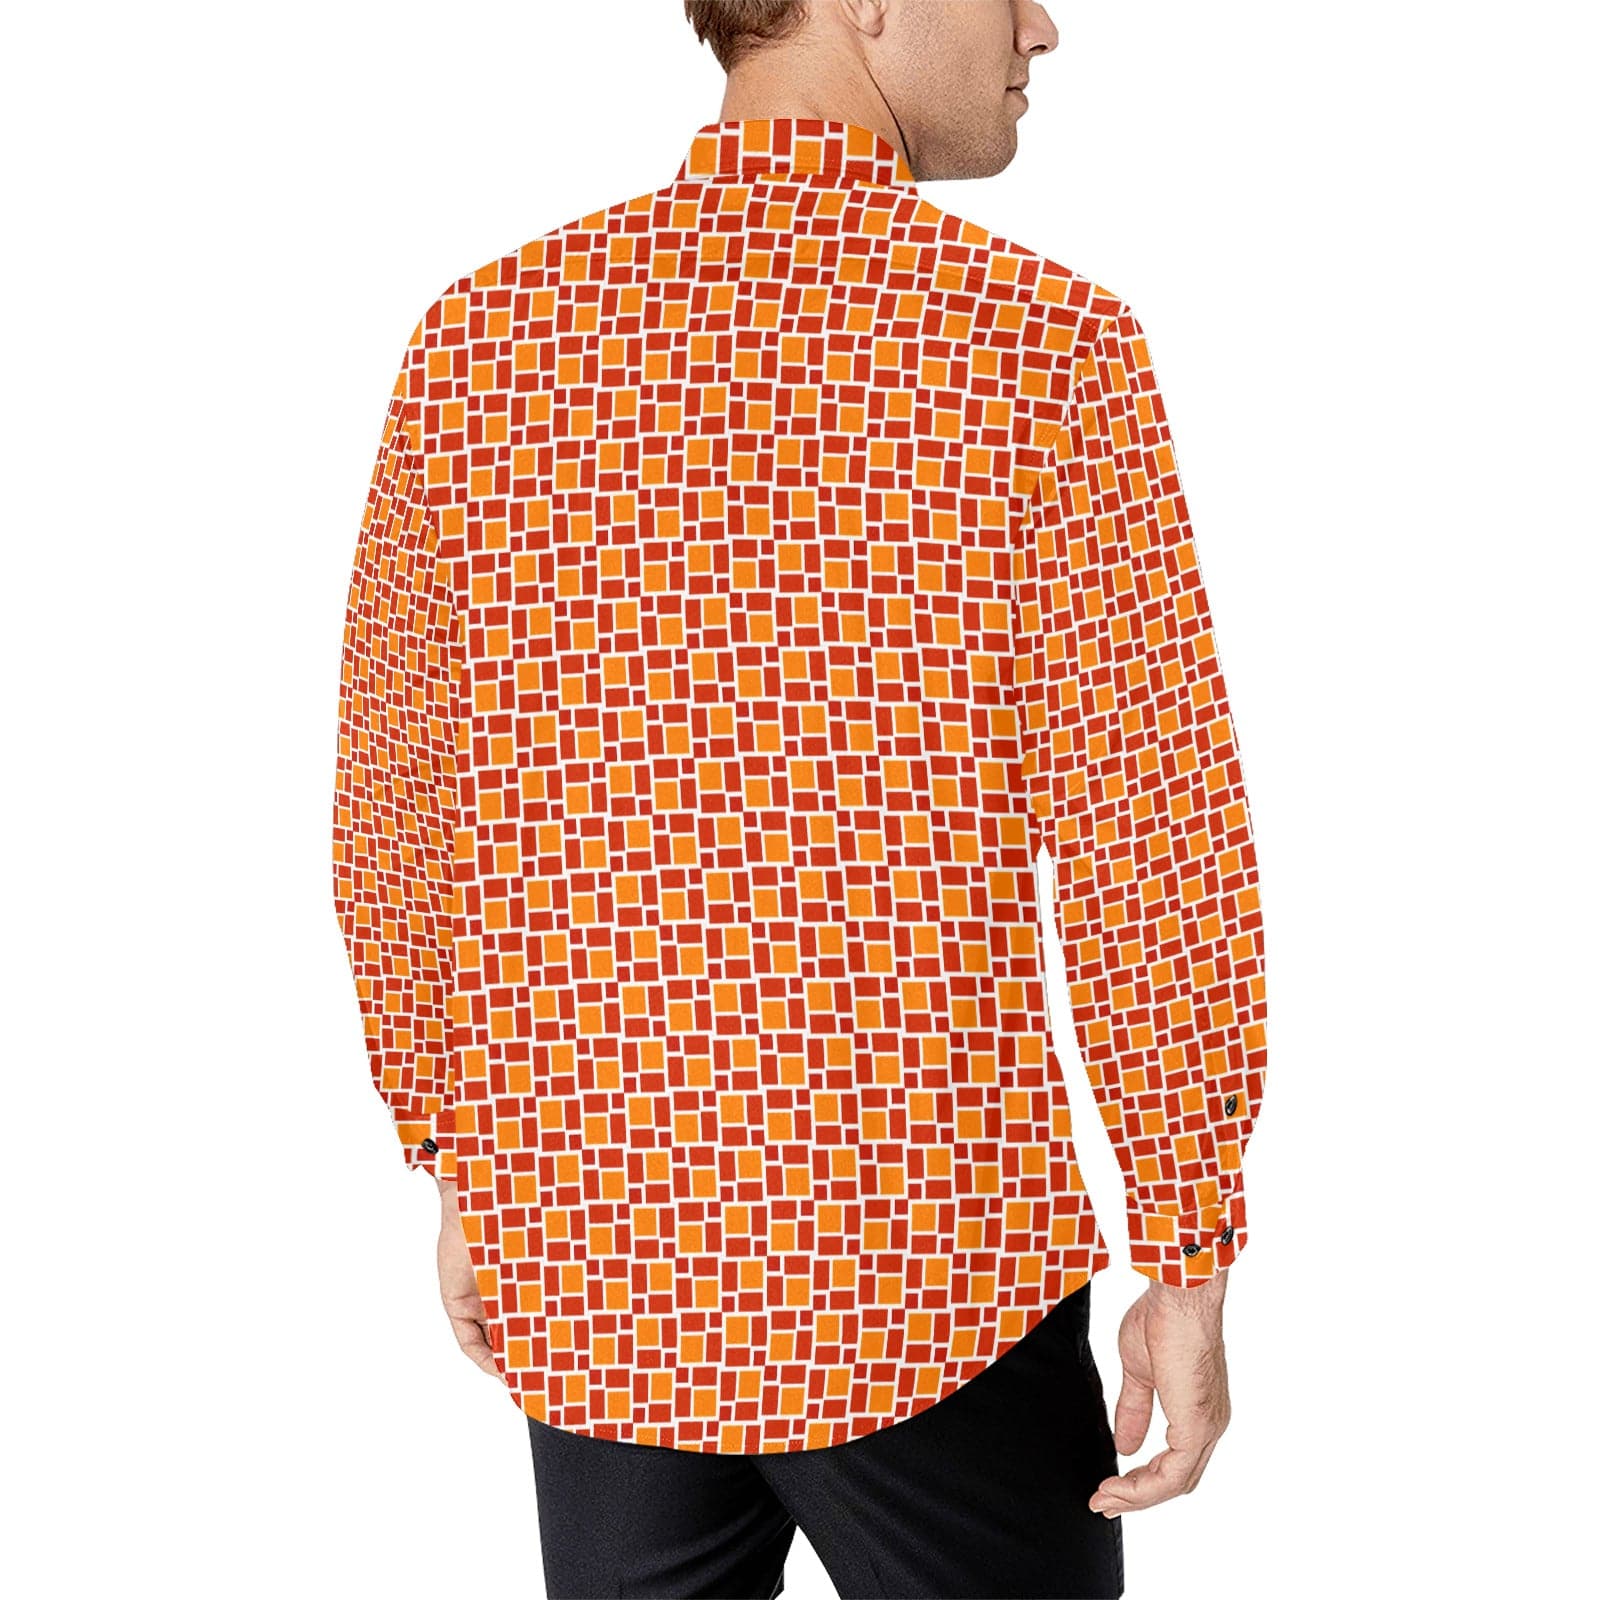 Sensus Studio Design Orange Patterned 2022 colorpallet Men's Long Sleeve Shirt